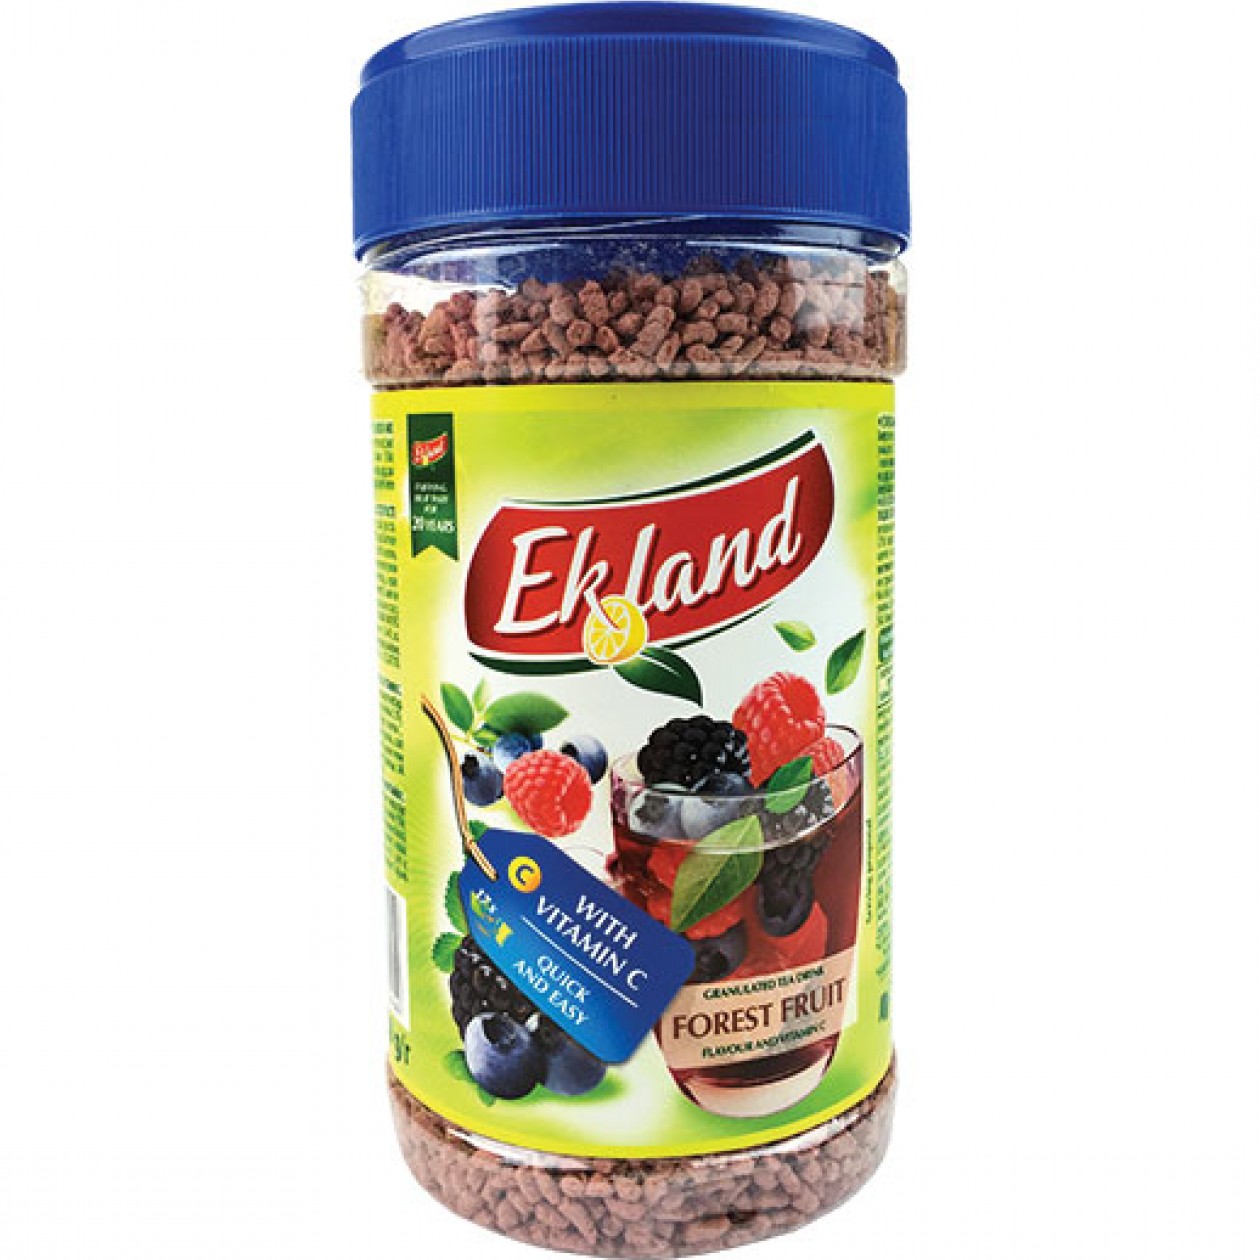 Ekoland Tea (Jar) Forest Fruit Drink 350g